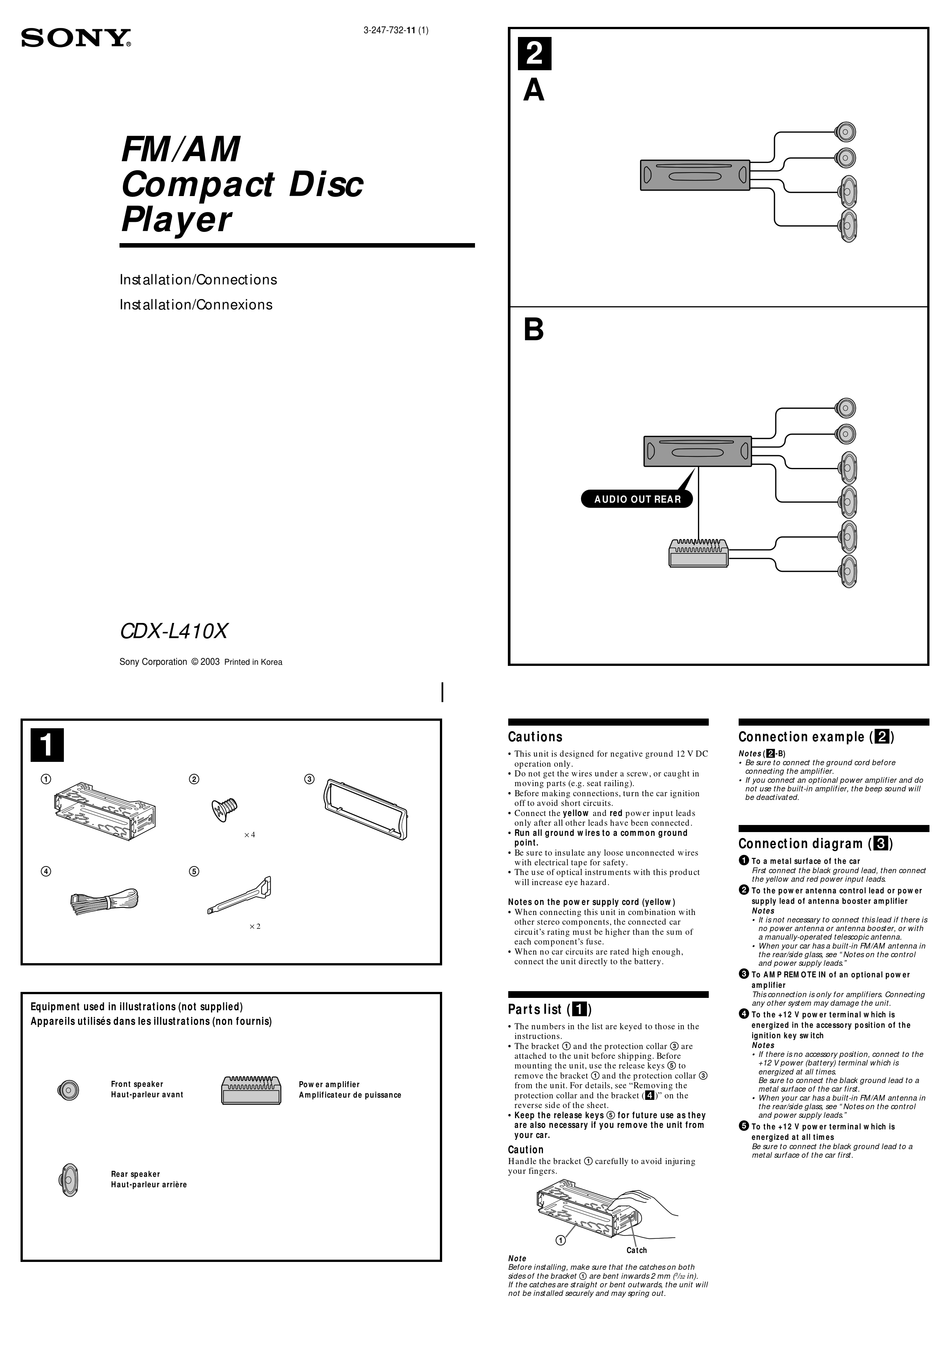 SONY CDX-L410X INSTALLATION/CONNECTIONS Pdf Download | ManualsLib  Sony Cdx L410x Wiring Harness Diagram    ManualsLib